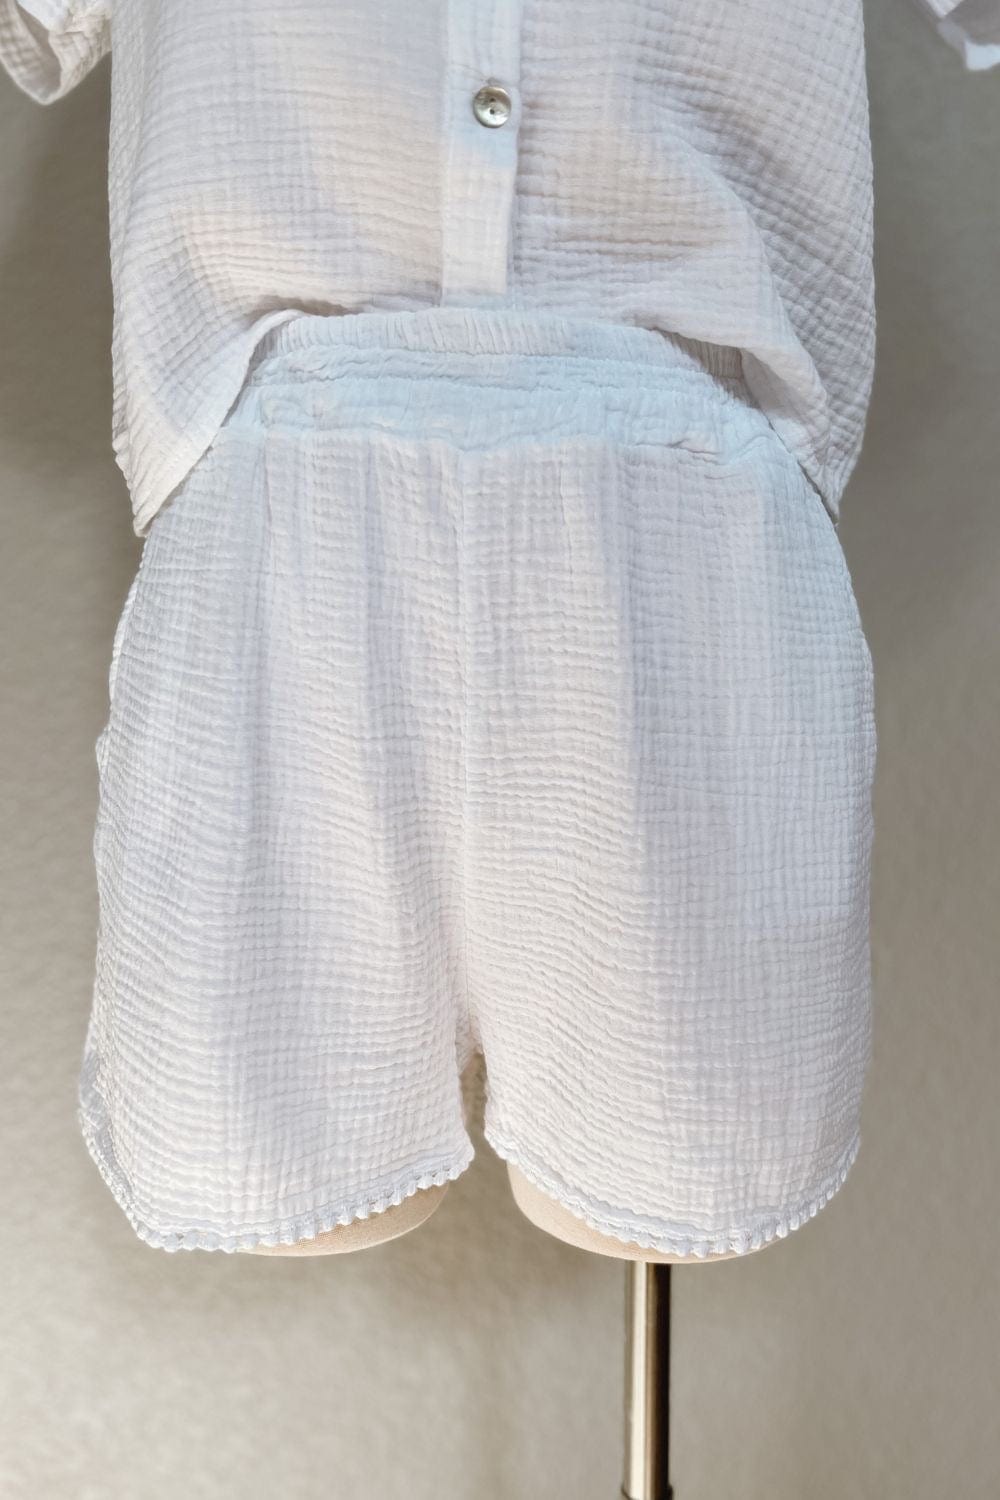 Saint Barths Italian White Cotton Gauze Shorts | Premium Quality & Stylish Comfort - Women's Shorts - Blooming Daily